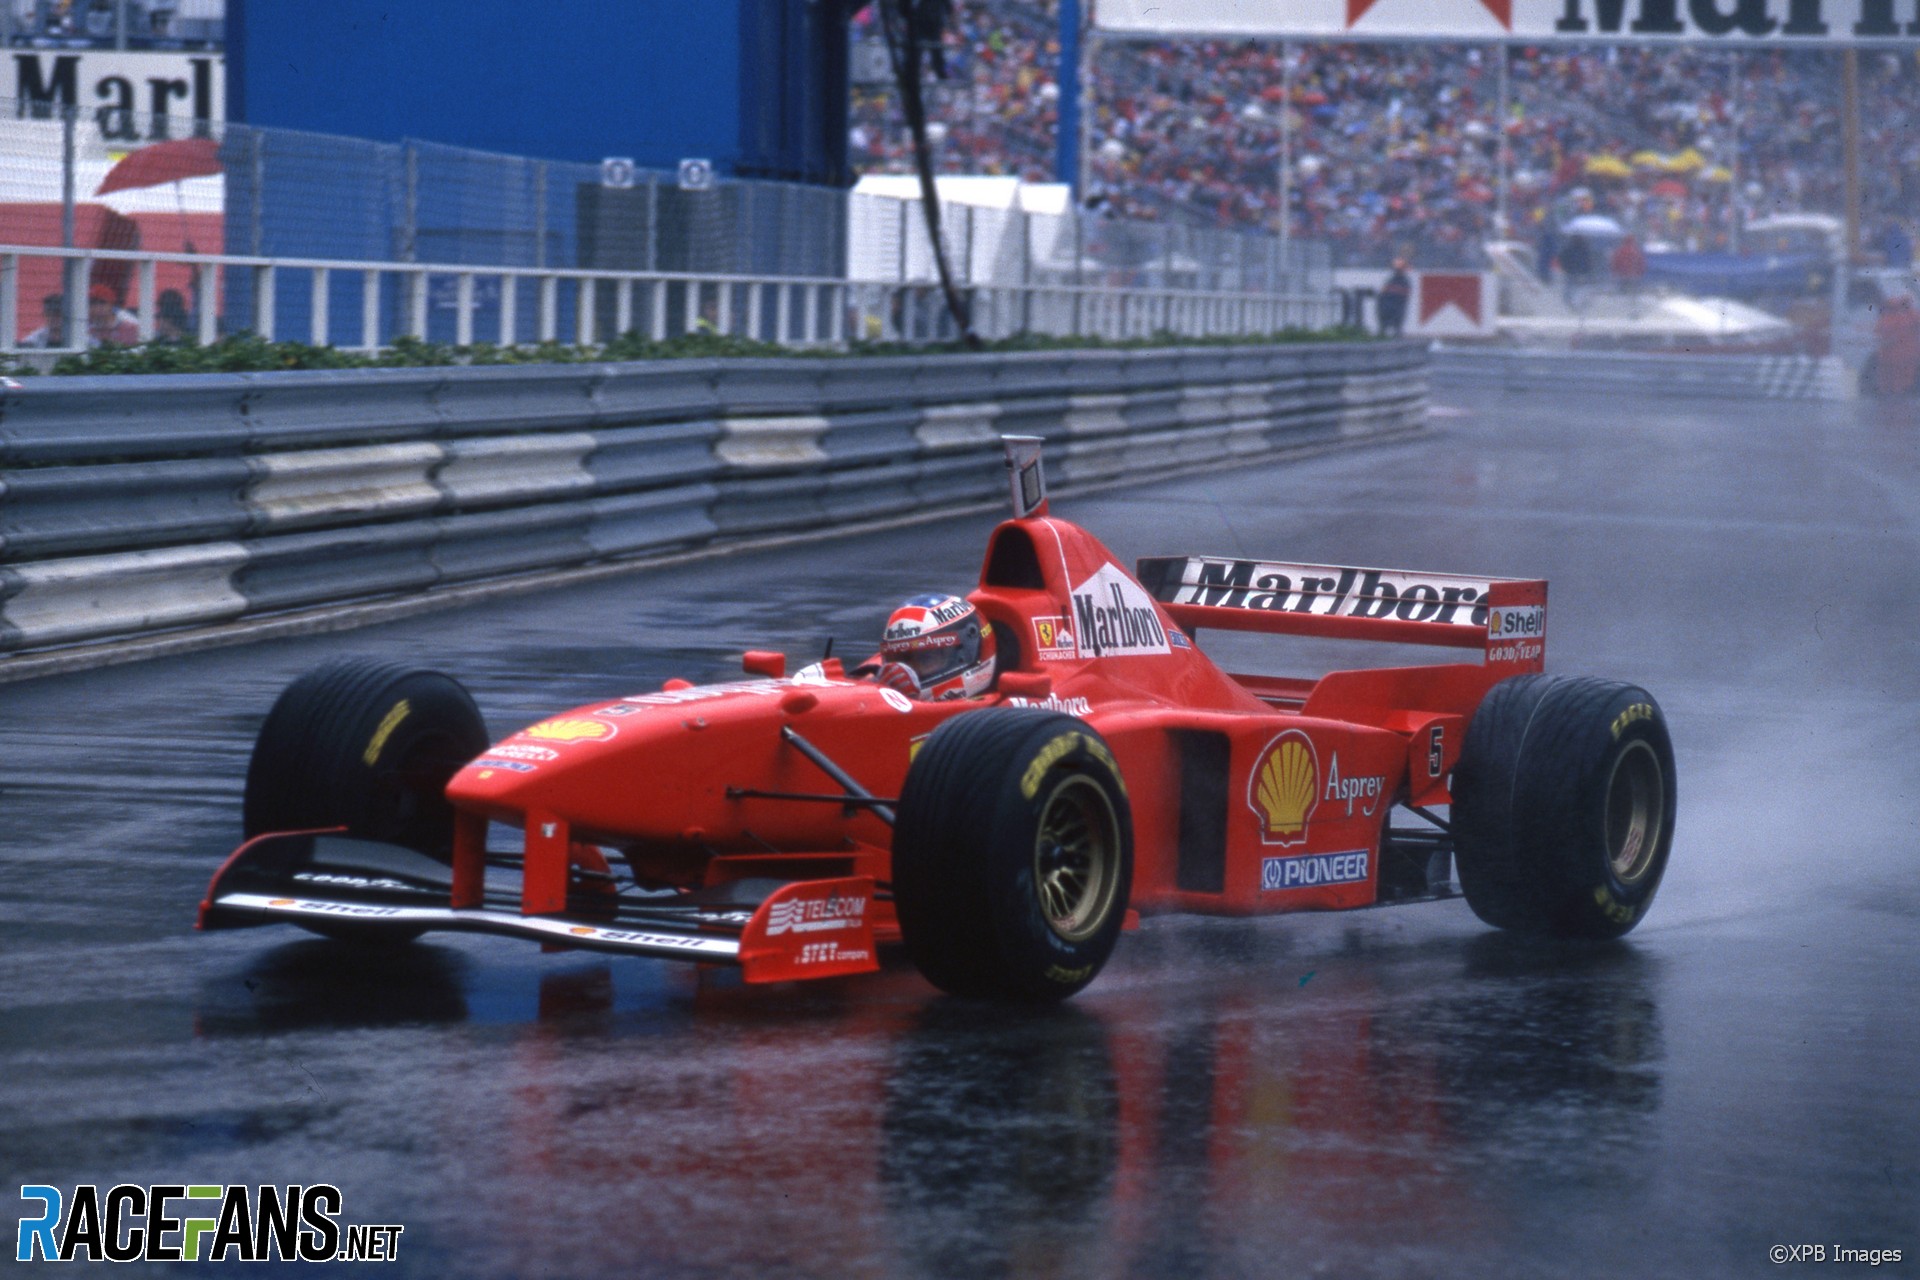 Michael Schumacher, Ferrari F310B, Monaco, 1997